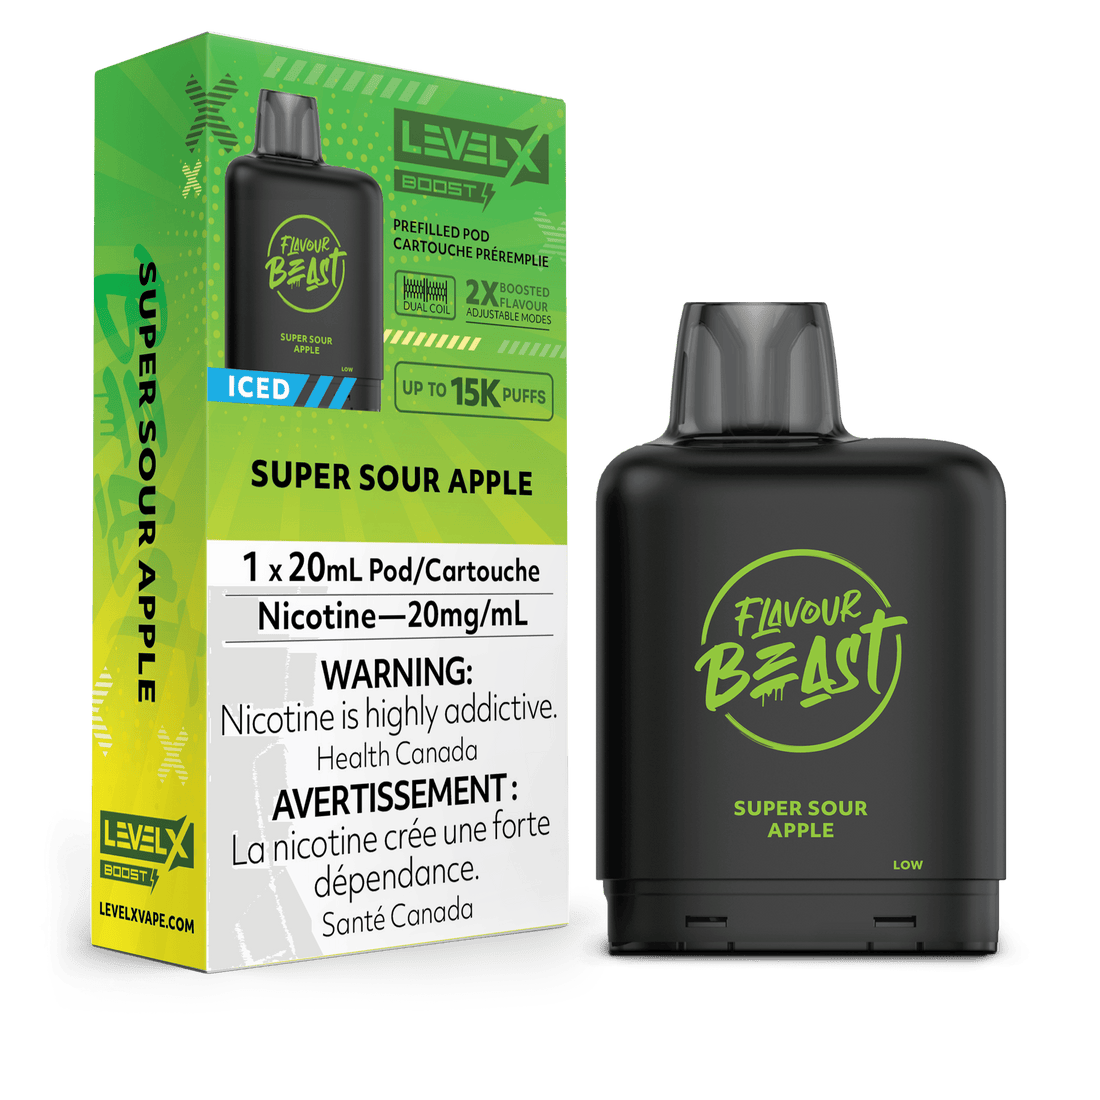 Level X Boost Flavour Beast - Super Sour Apple Iced - Vapor Shoppe